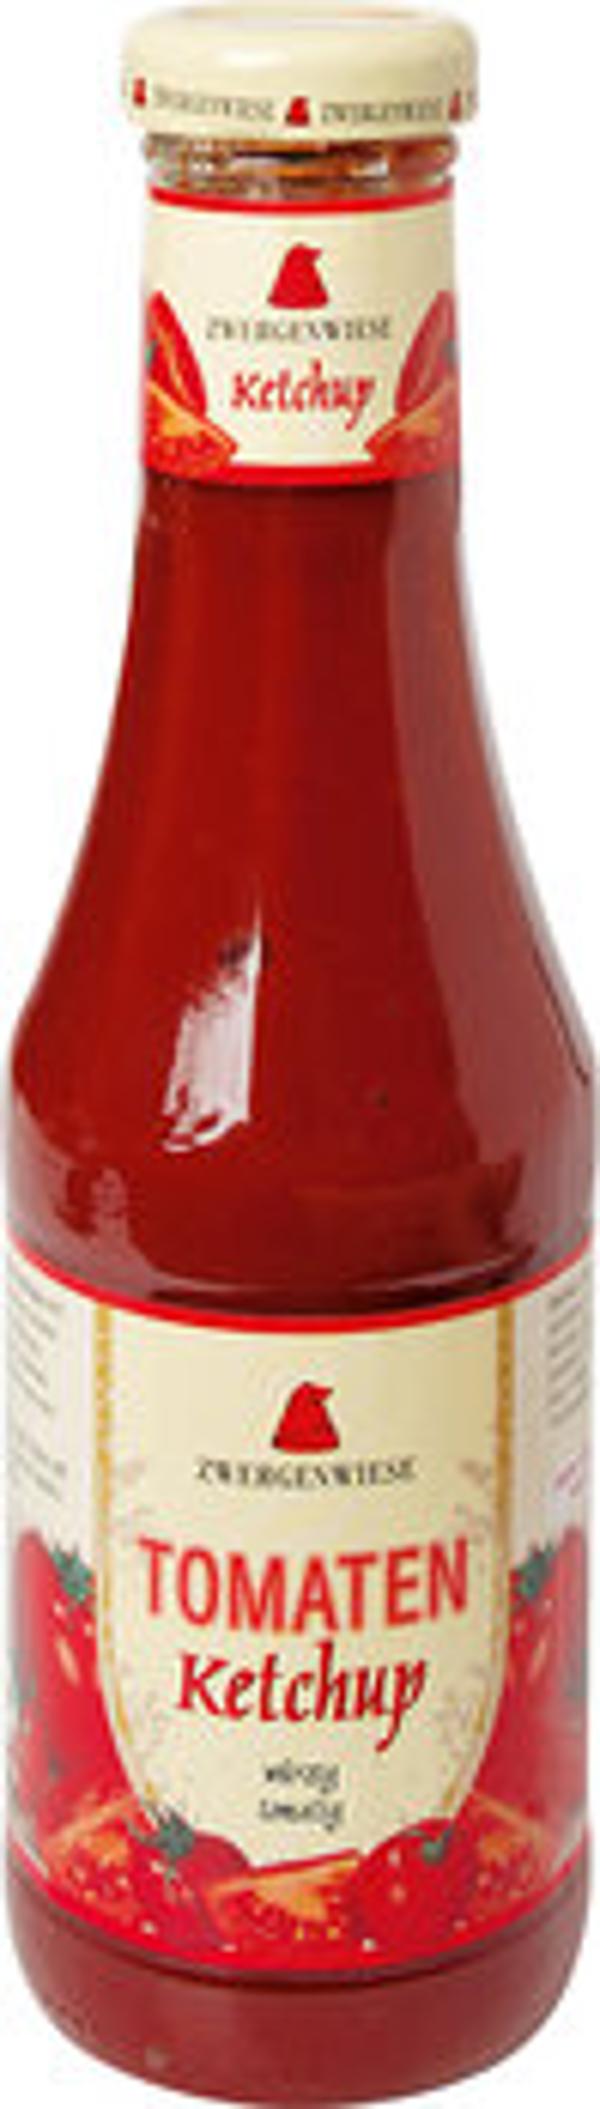 Produktfoto zu Tomaten Ketchup 500 ml